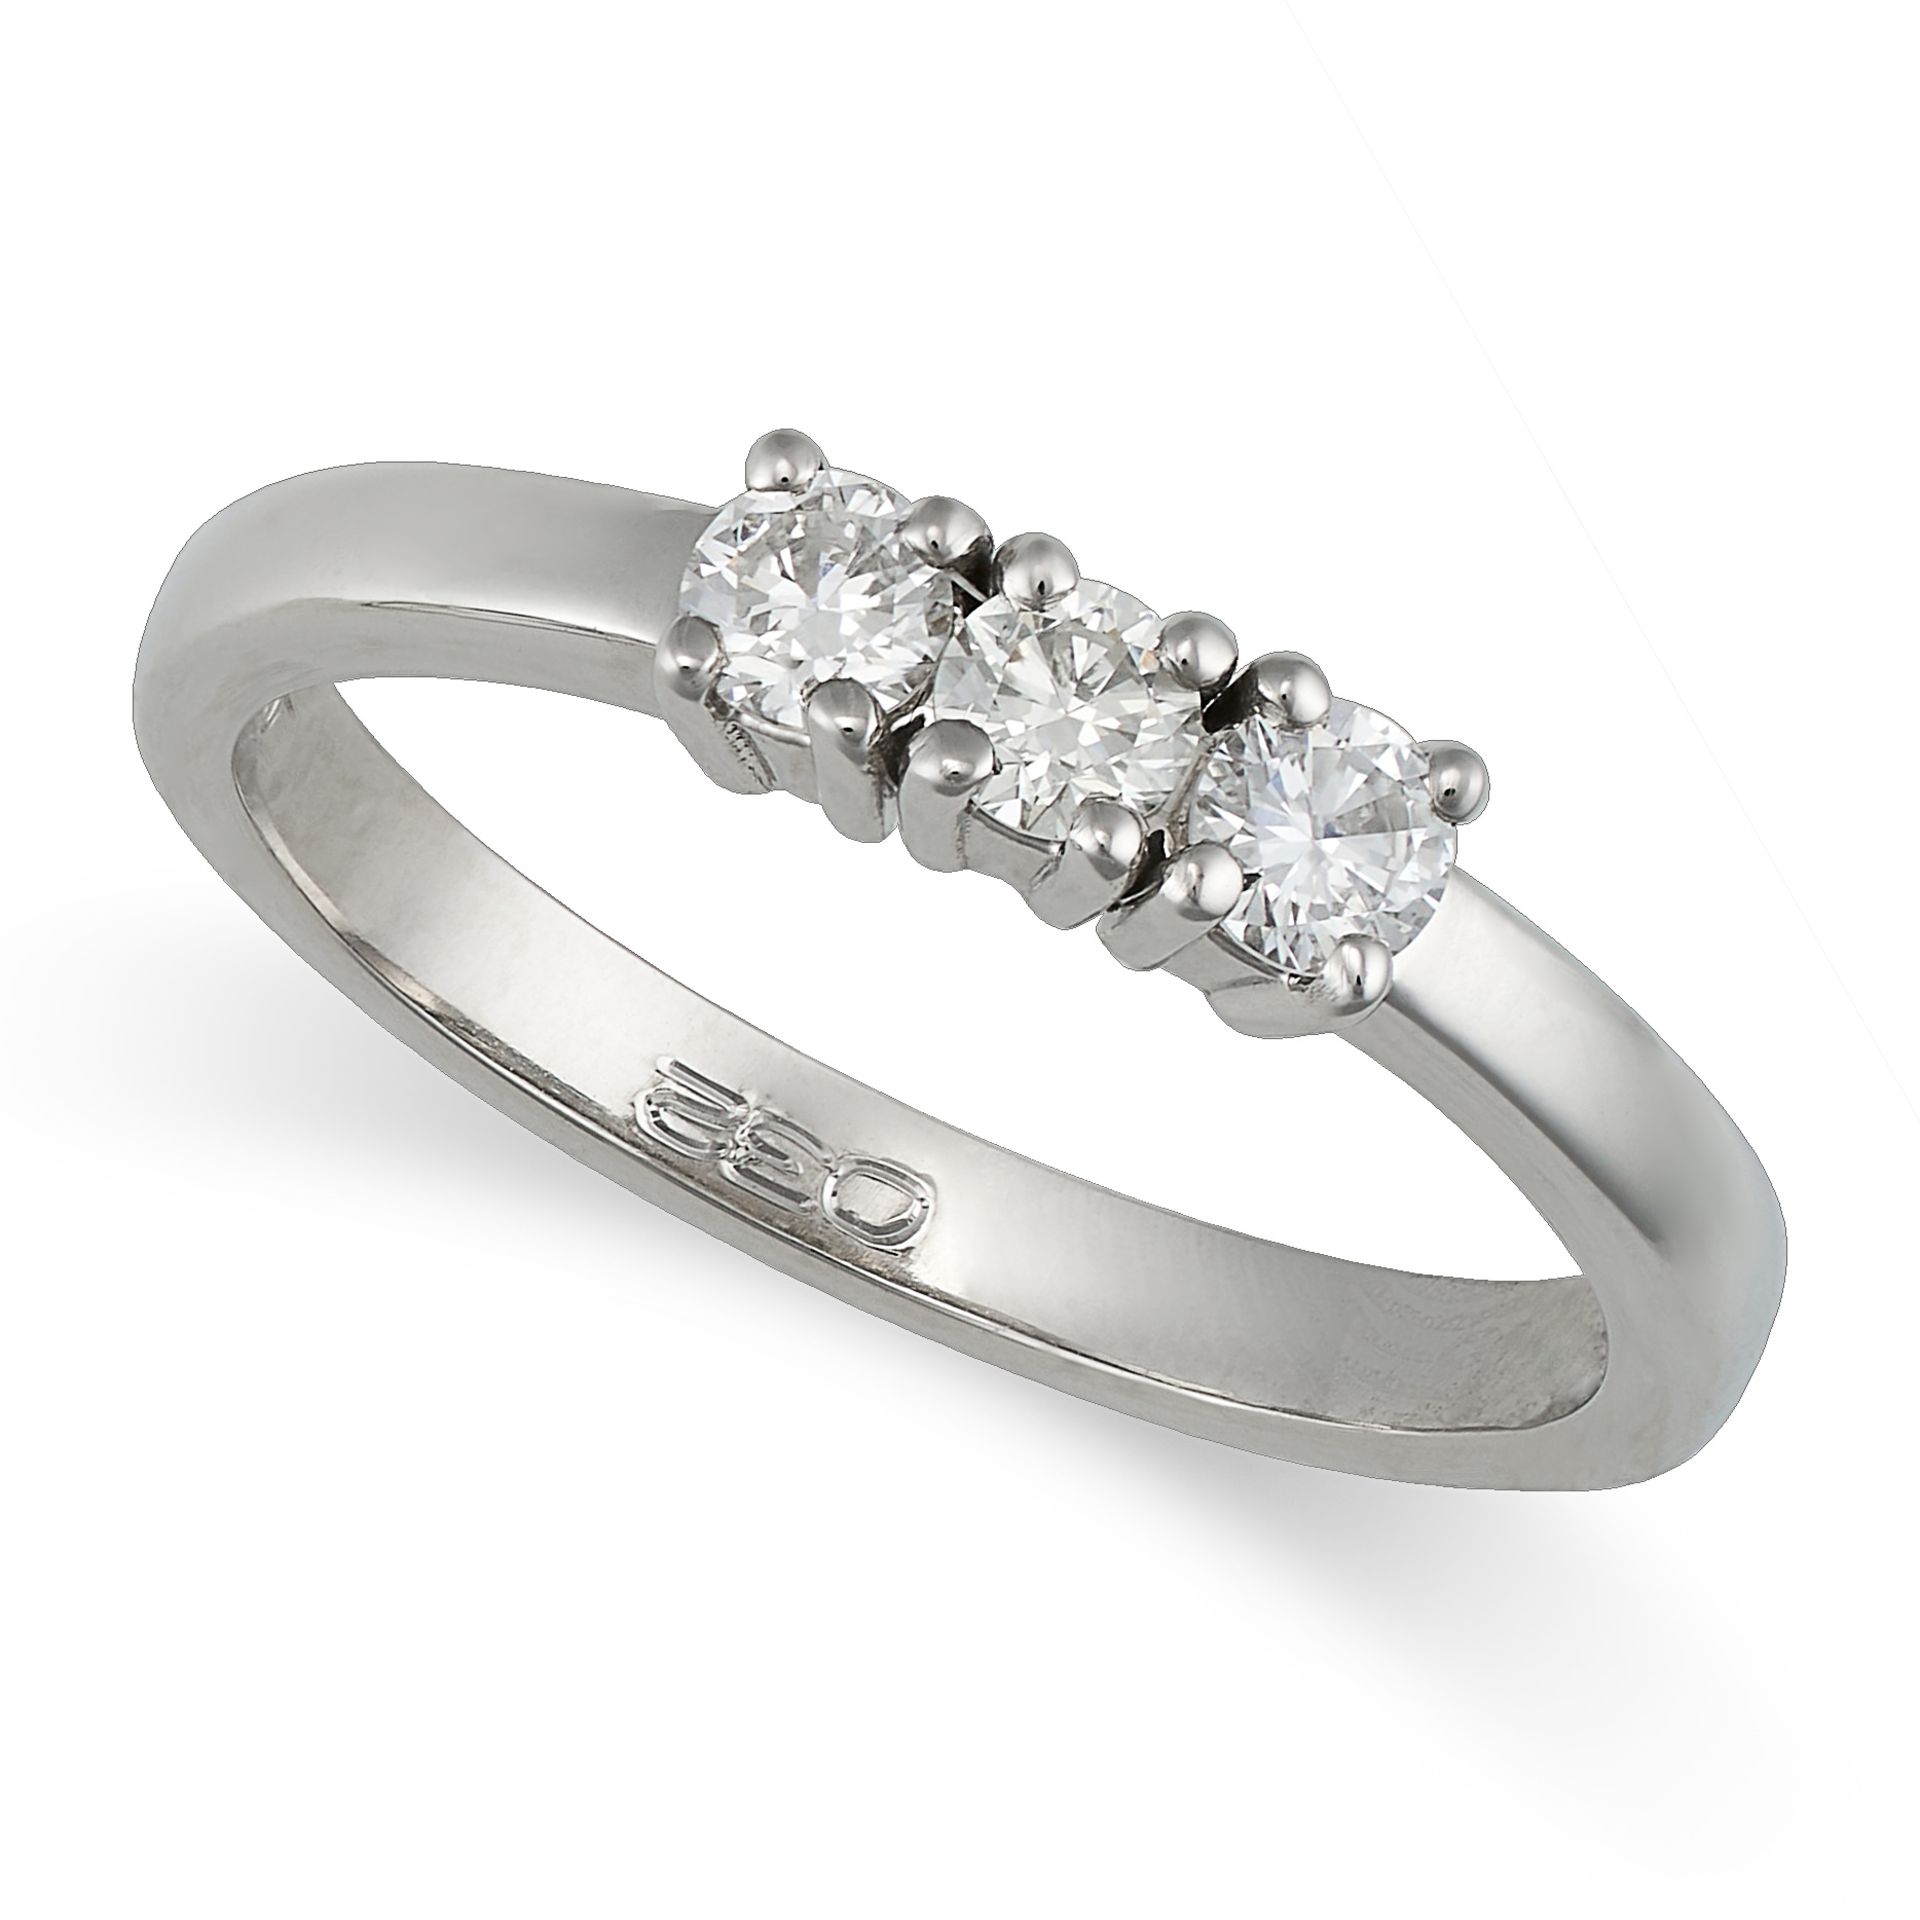 A DIAMOND THREE STONE RING in platinum, set with three round brilliant cut diamonds, full British...